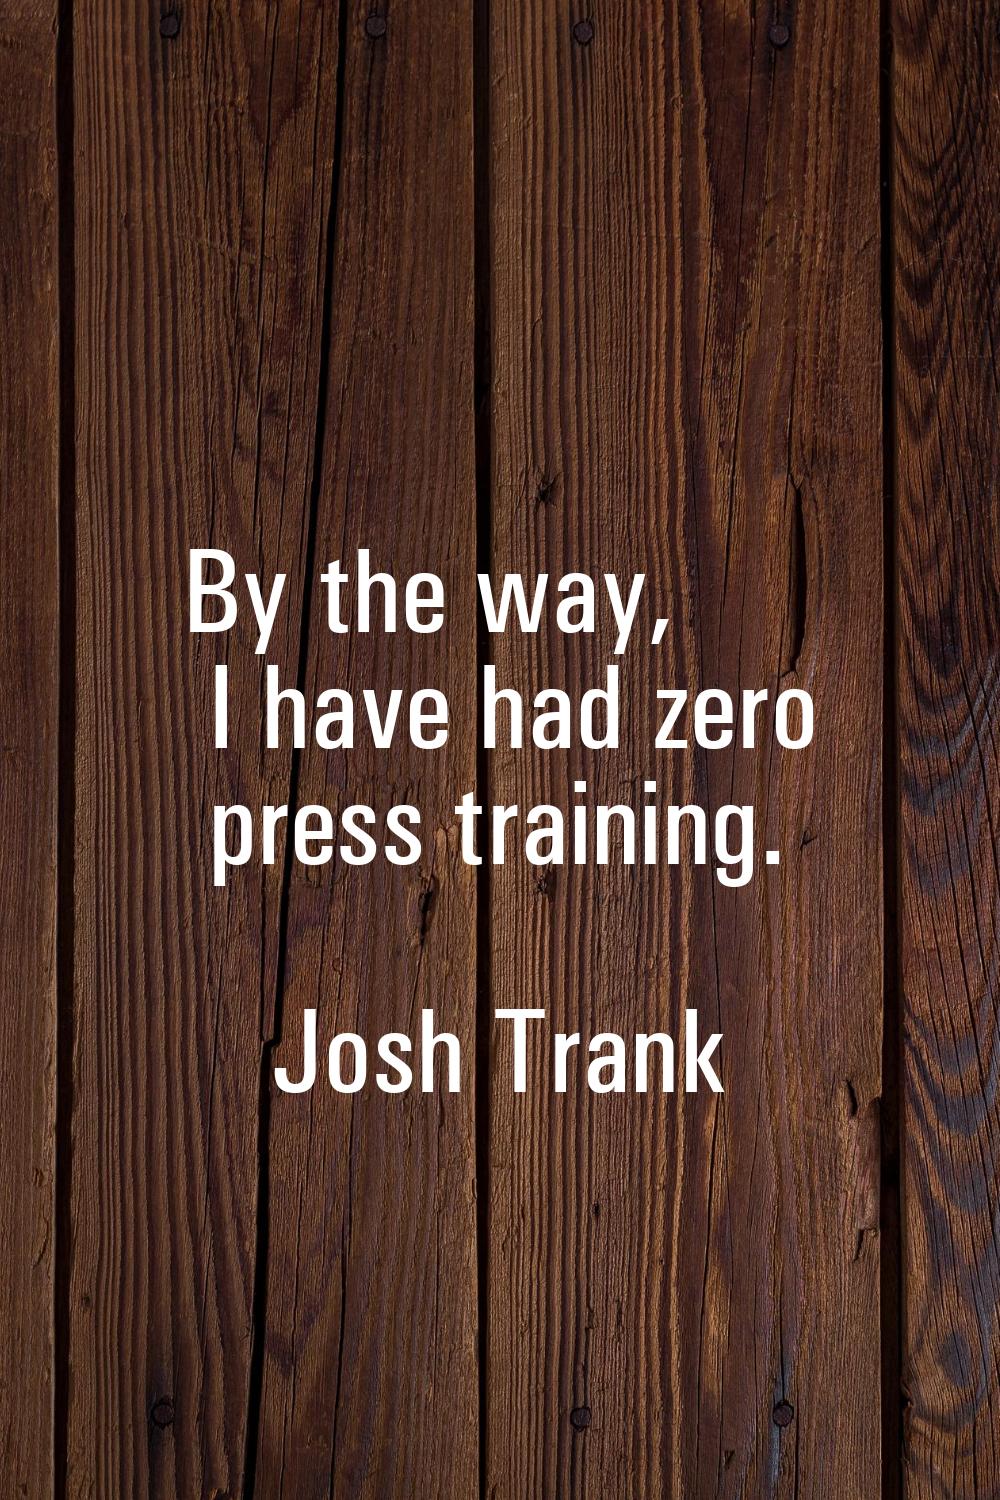 By the way, I have had zero press training.